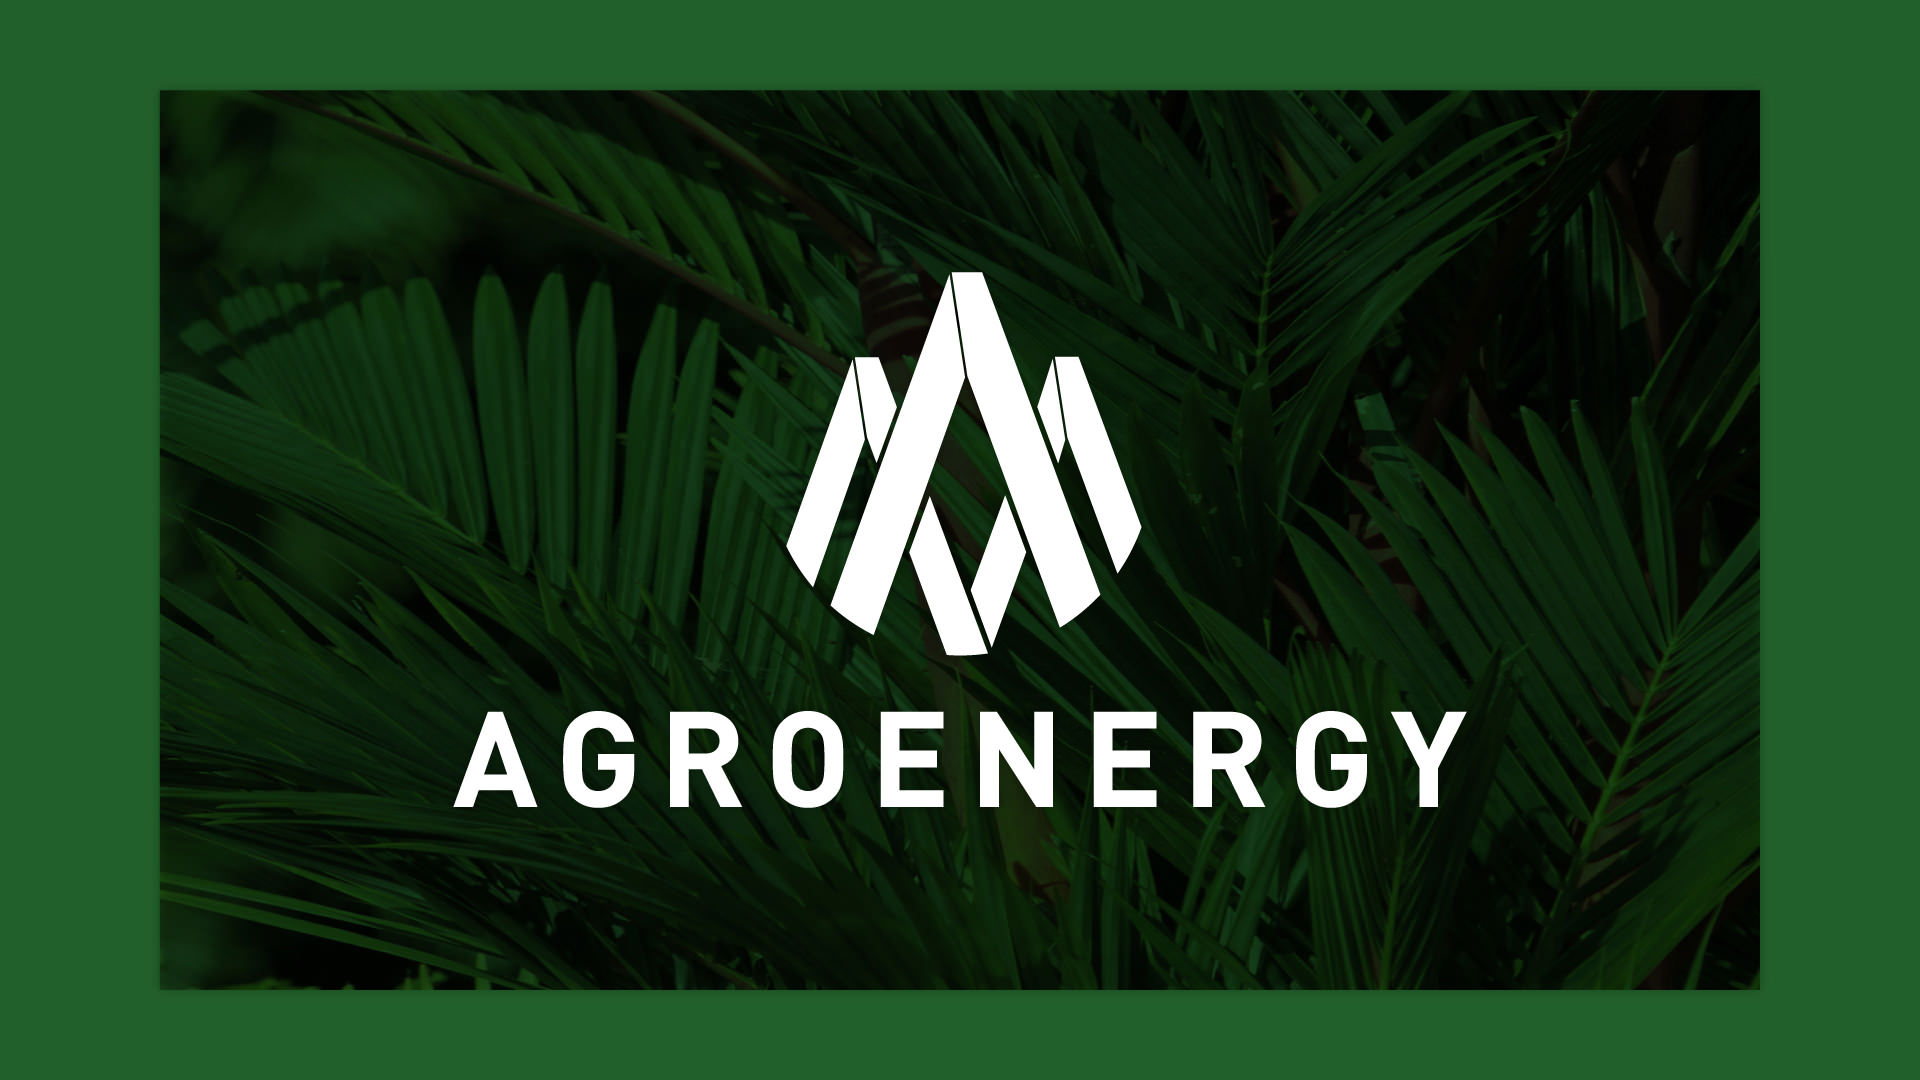 Agroenergy